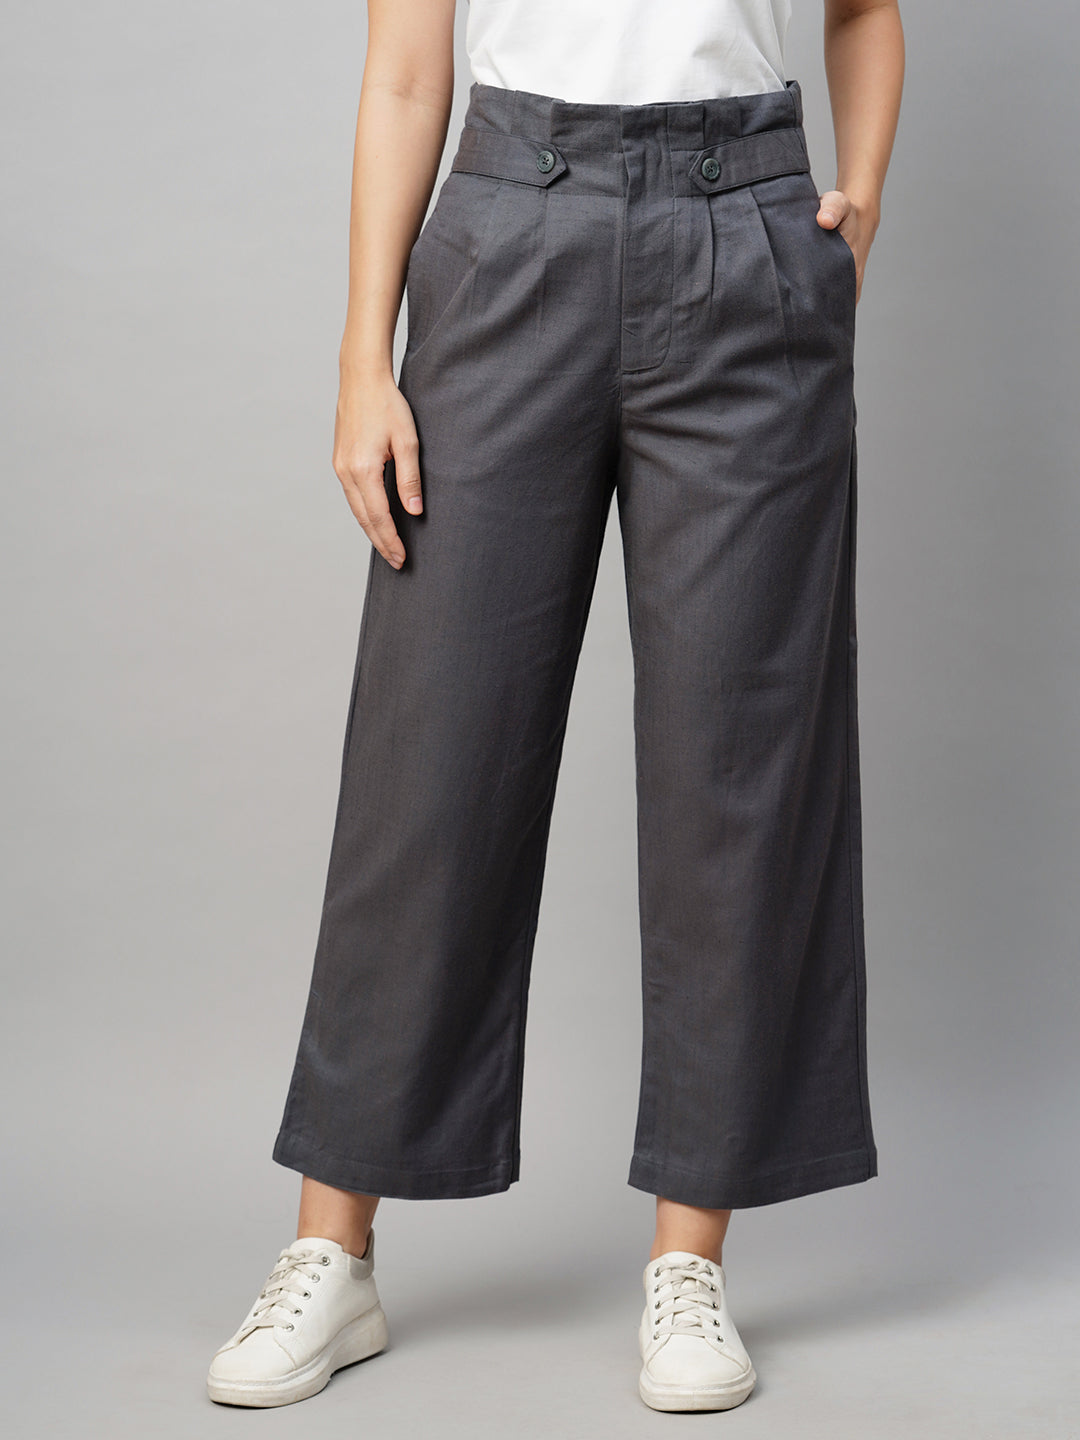 Women's Grey Viscose Cotton Linen Straight Fit Pant